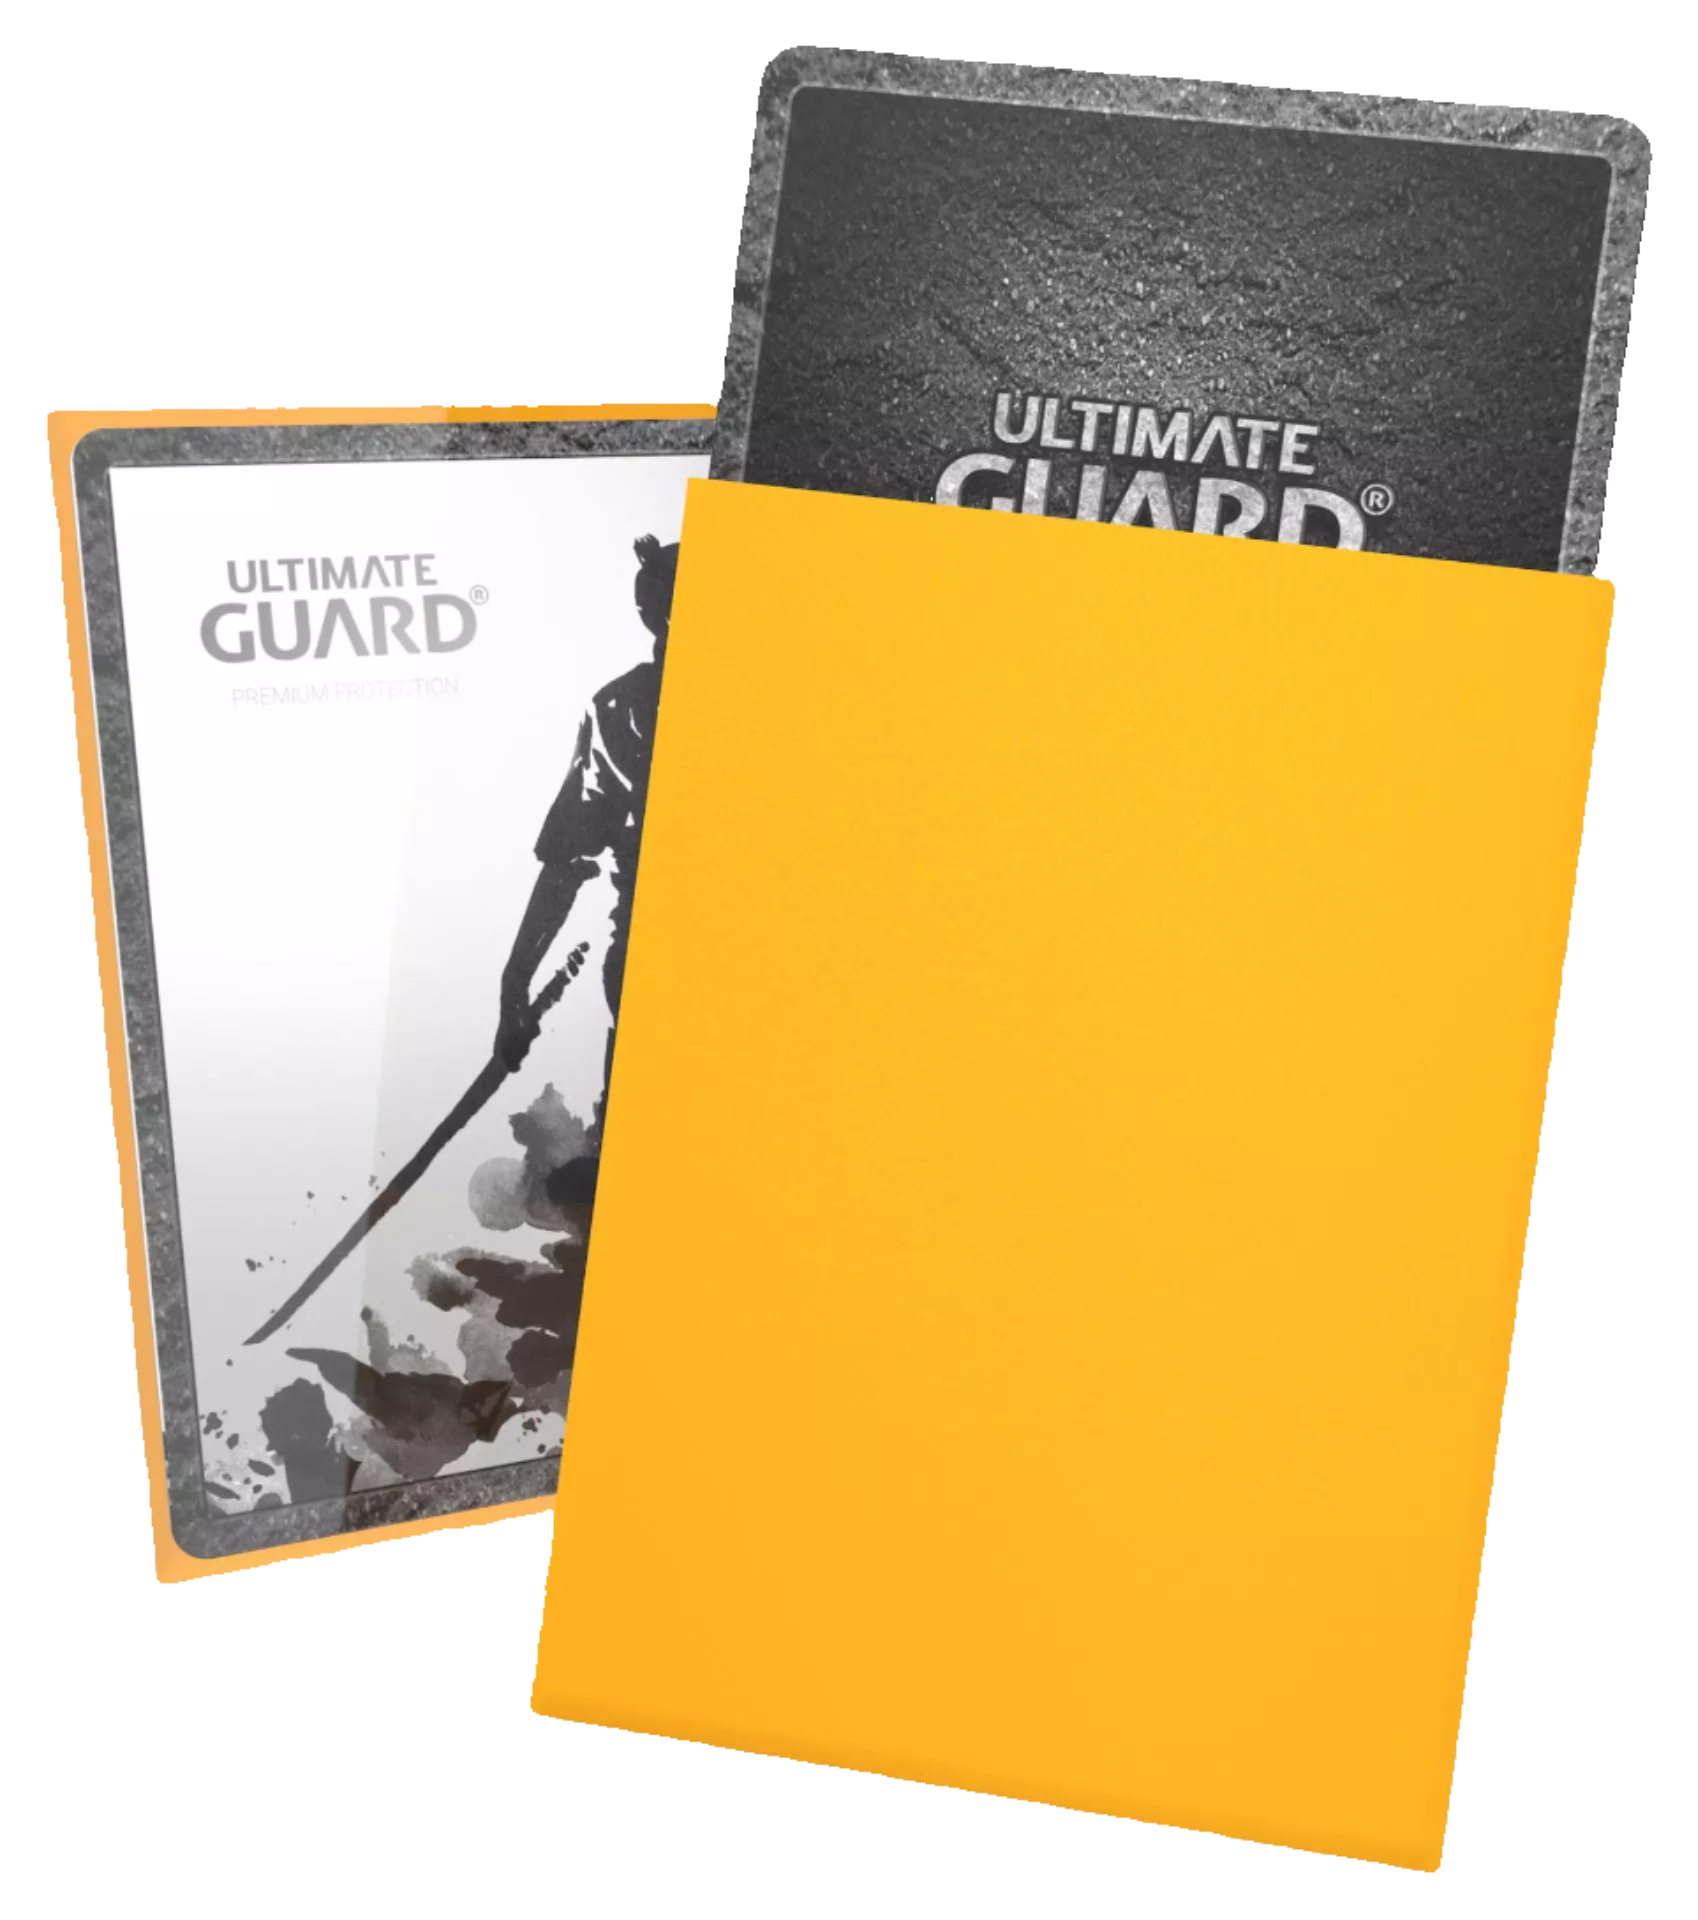 Ultimate Guard - Katana Sleeves - Standard Size - Ideal-Fit - Yellow - 100pk